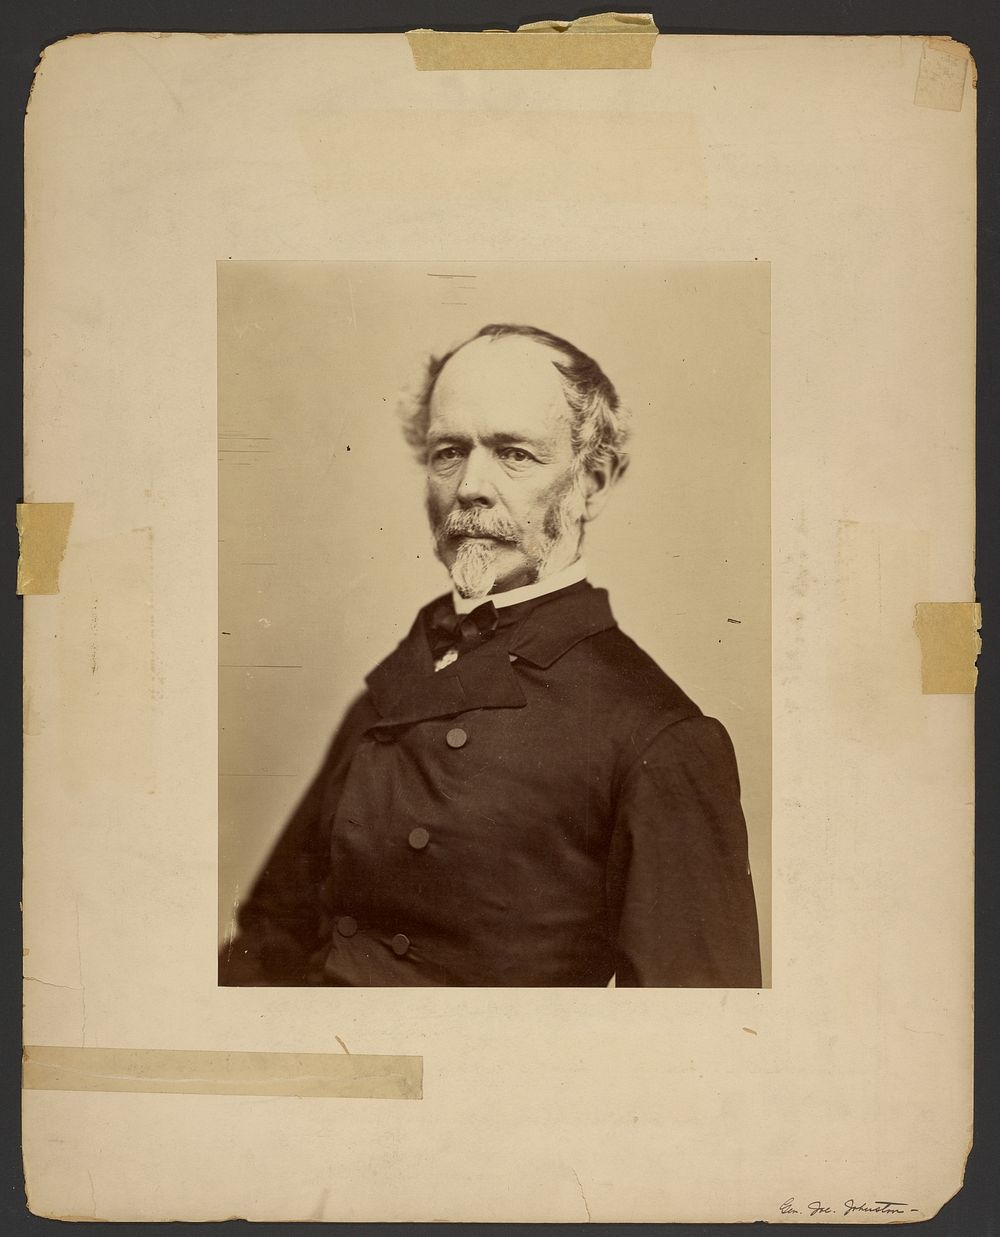 Portrait of General Joseph E. Johnston